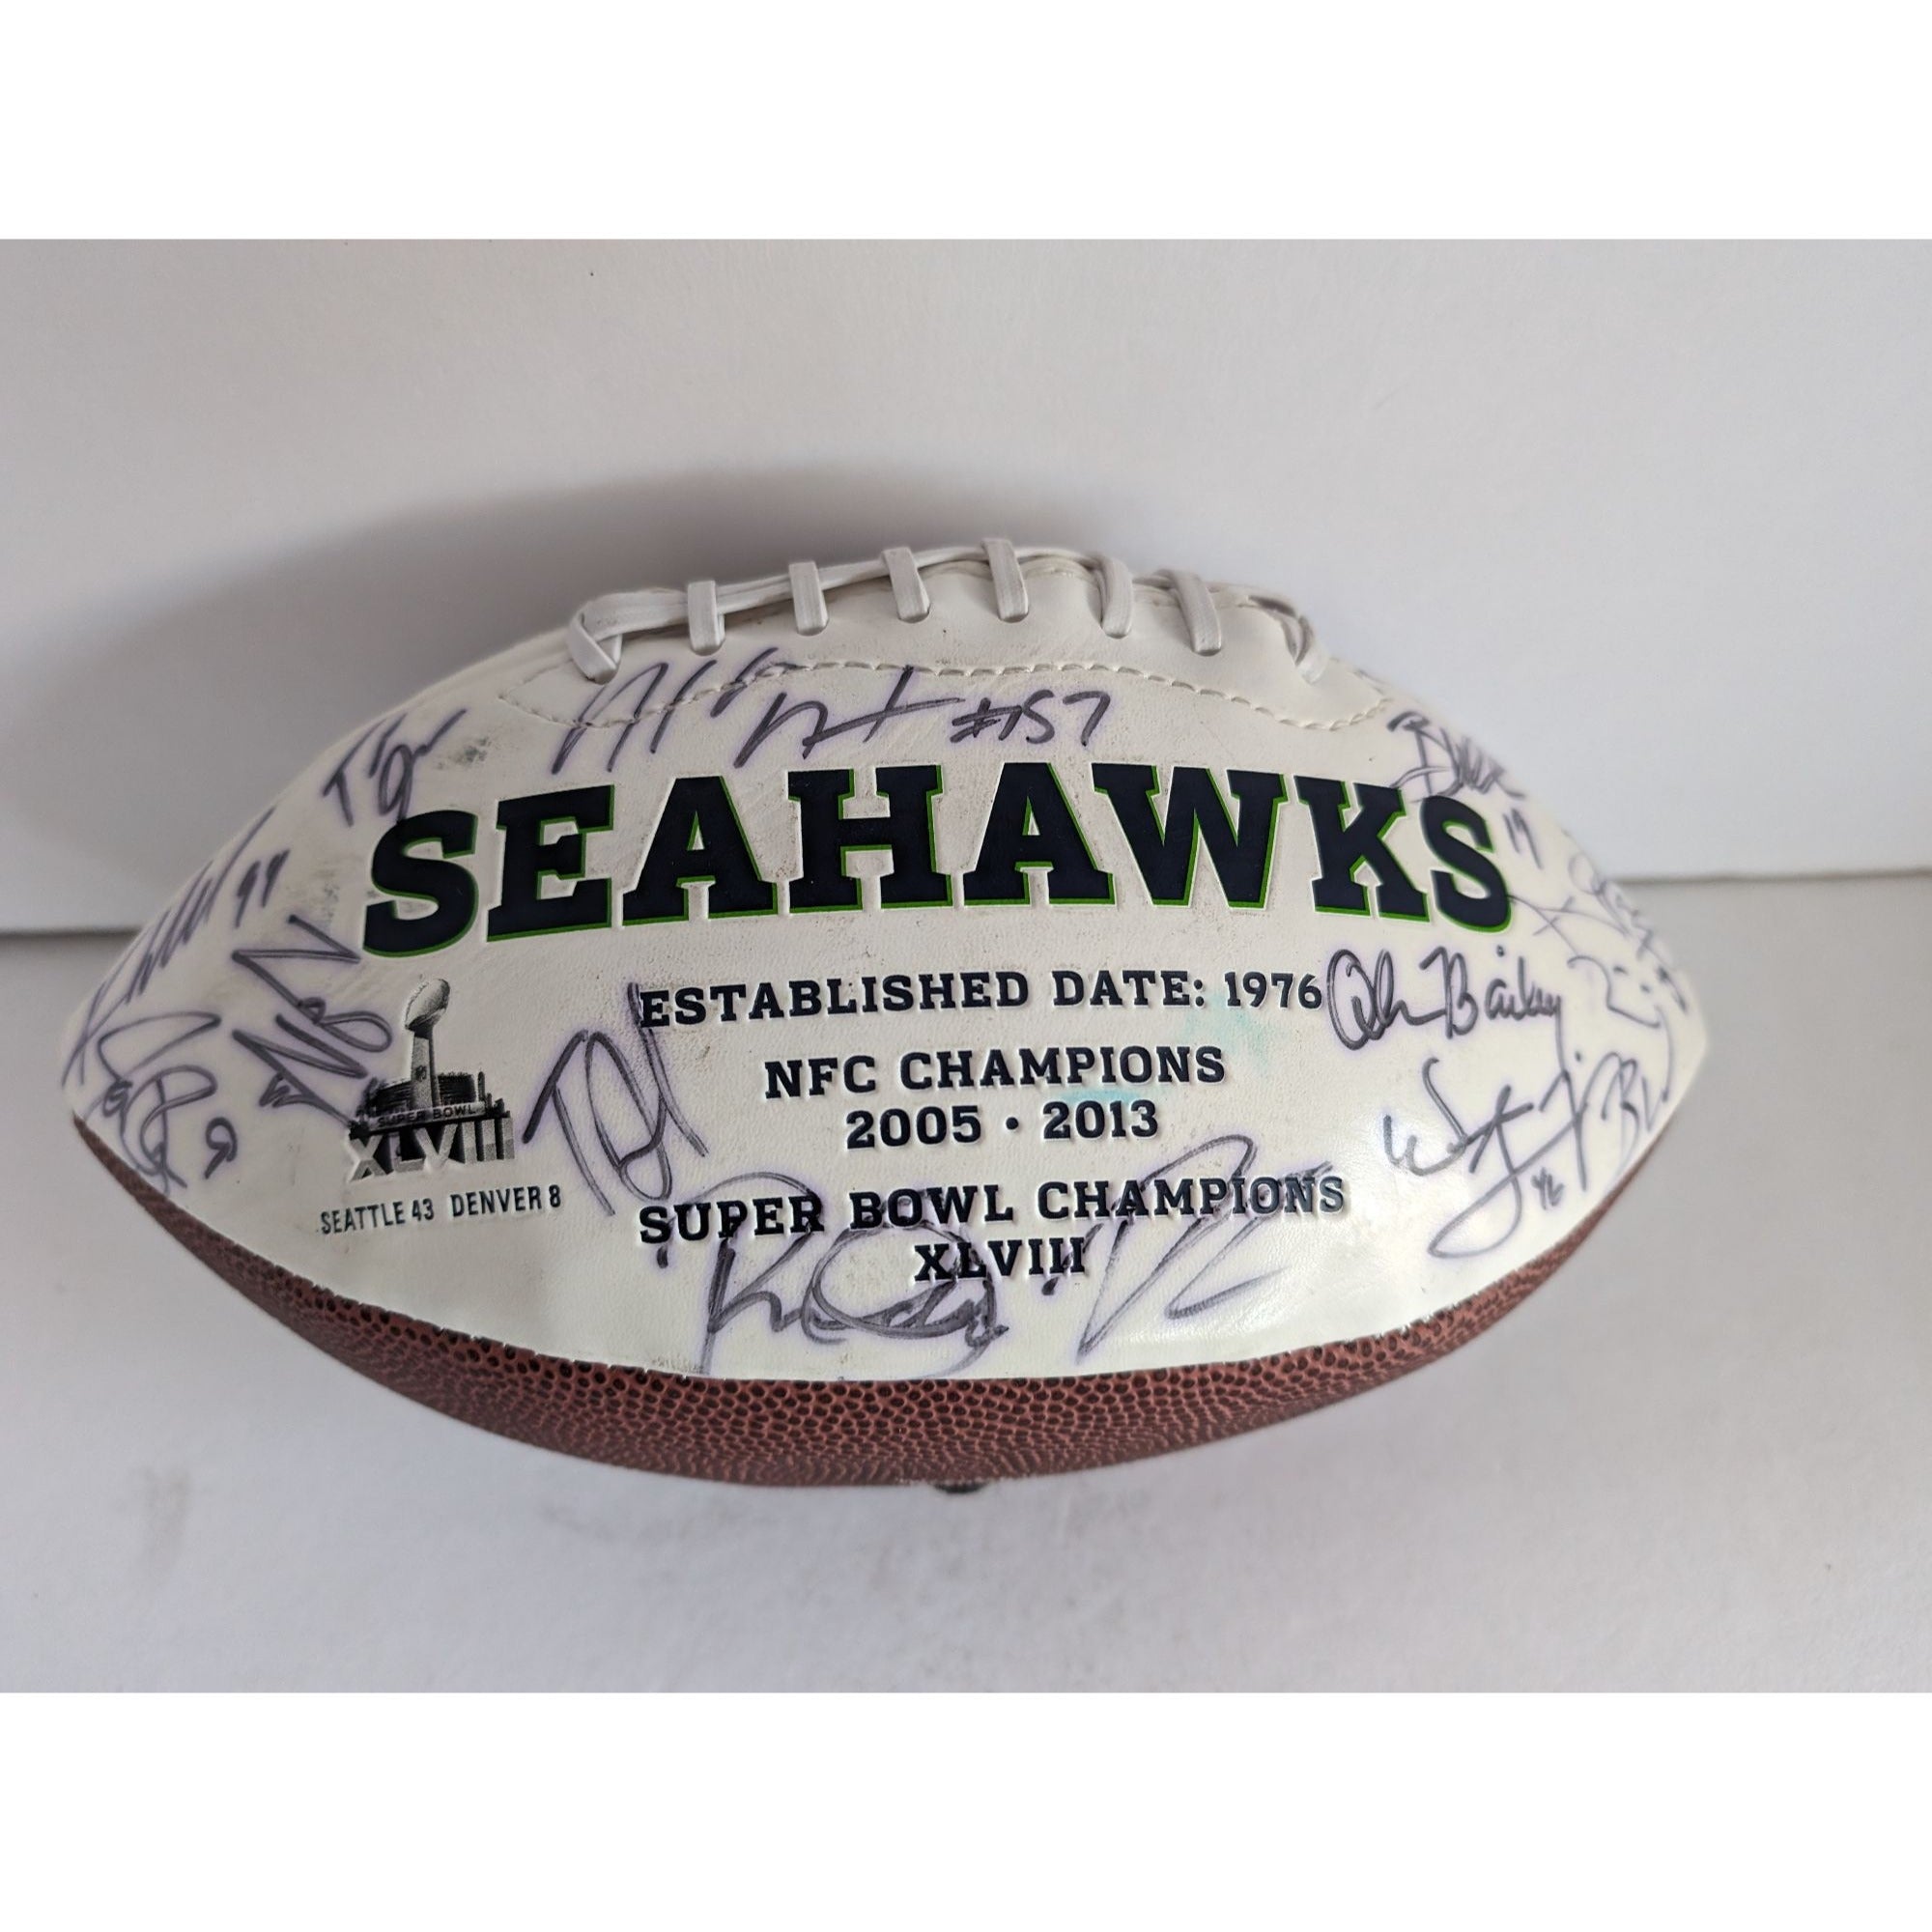 Seattle Seahawks Marshawn Lynch Pete Carroll Russell Wilson Richard Sherman Super Bowl champions team signed football